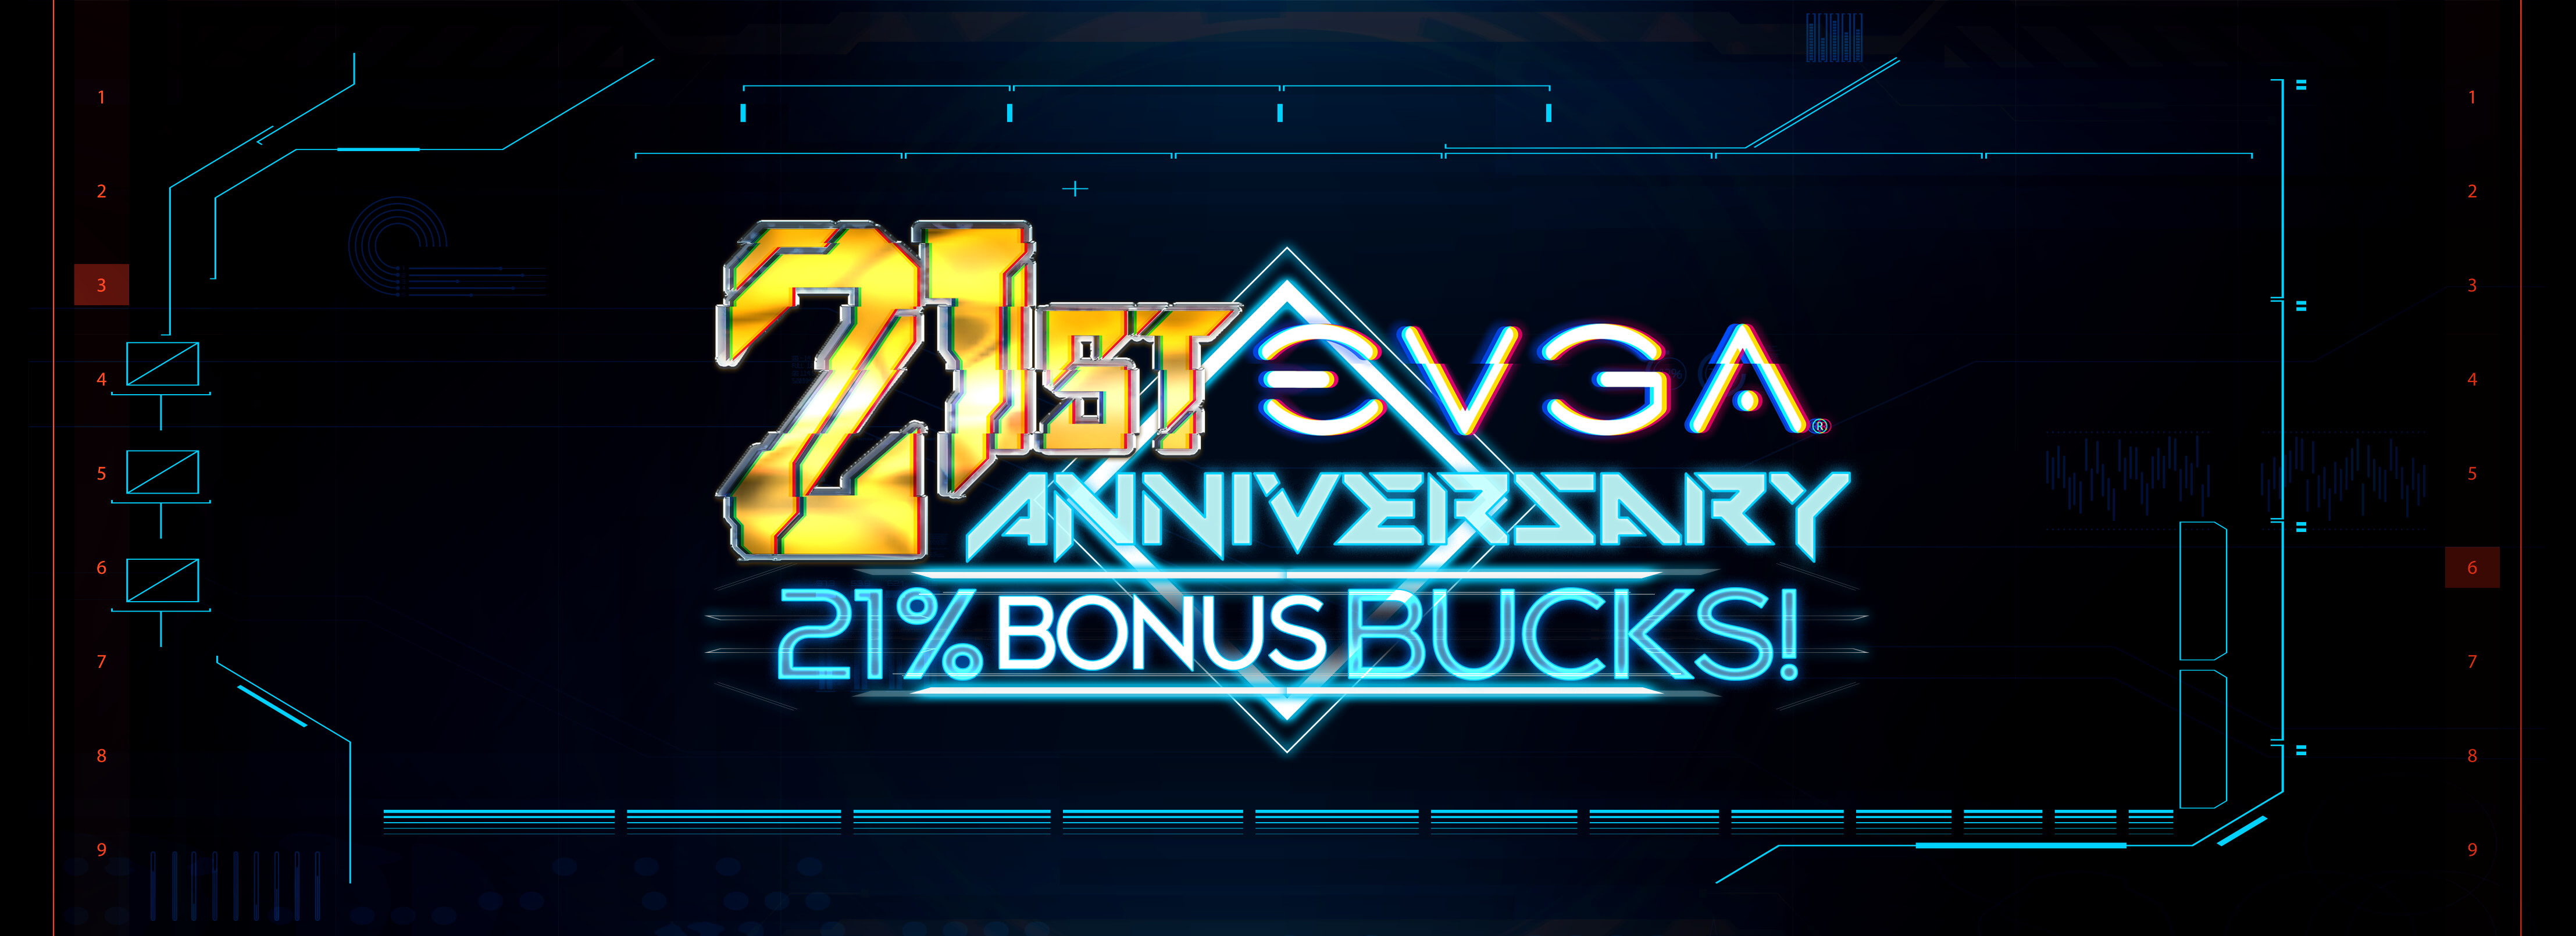 EVGA 21st Anniversary Bonus BUCKS